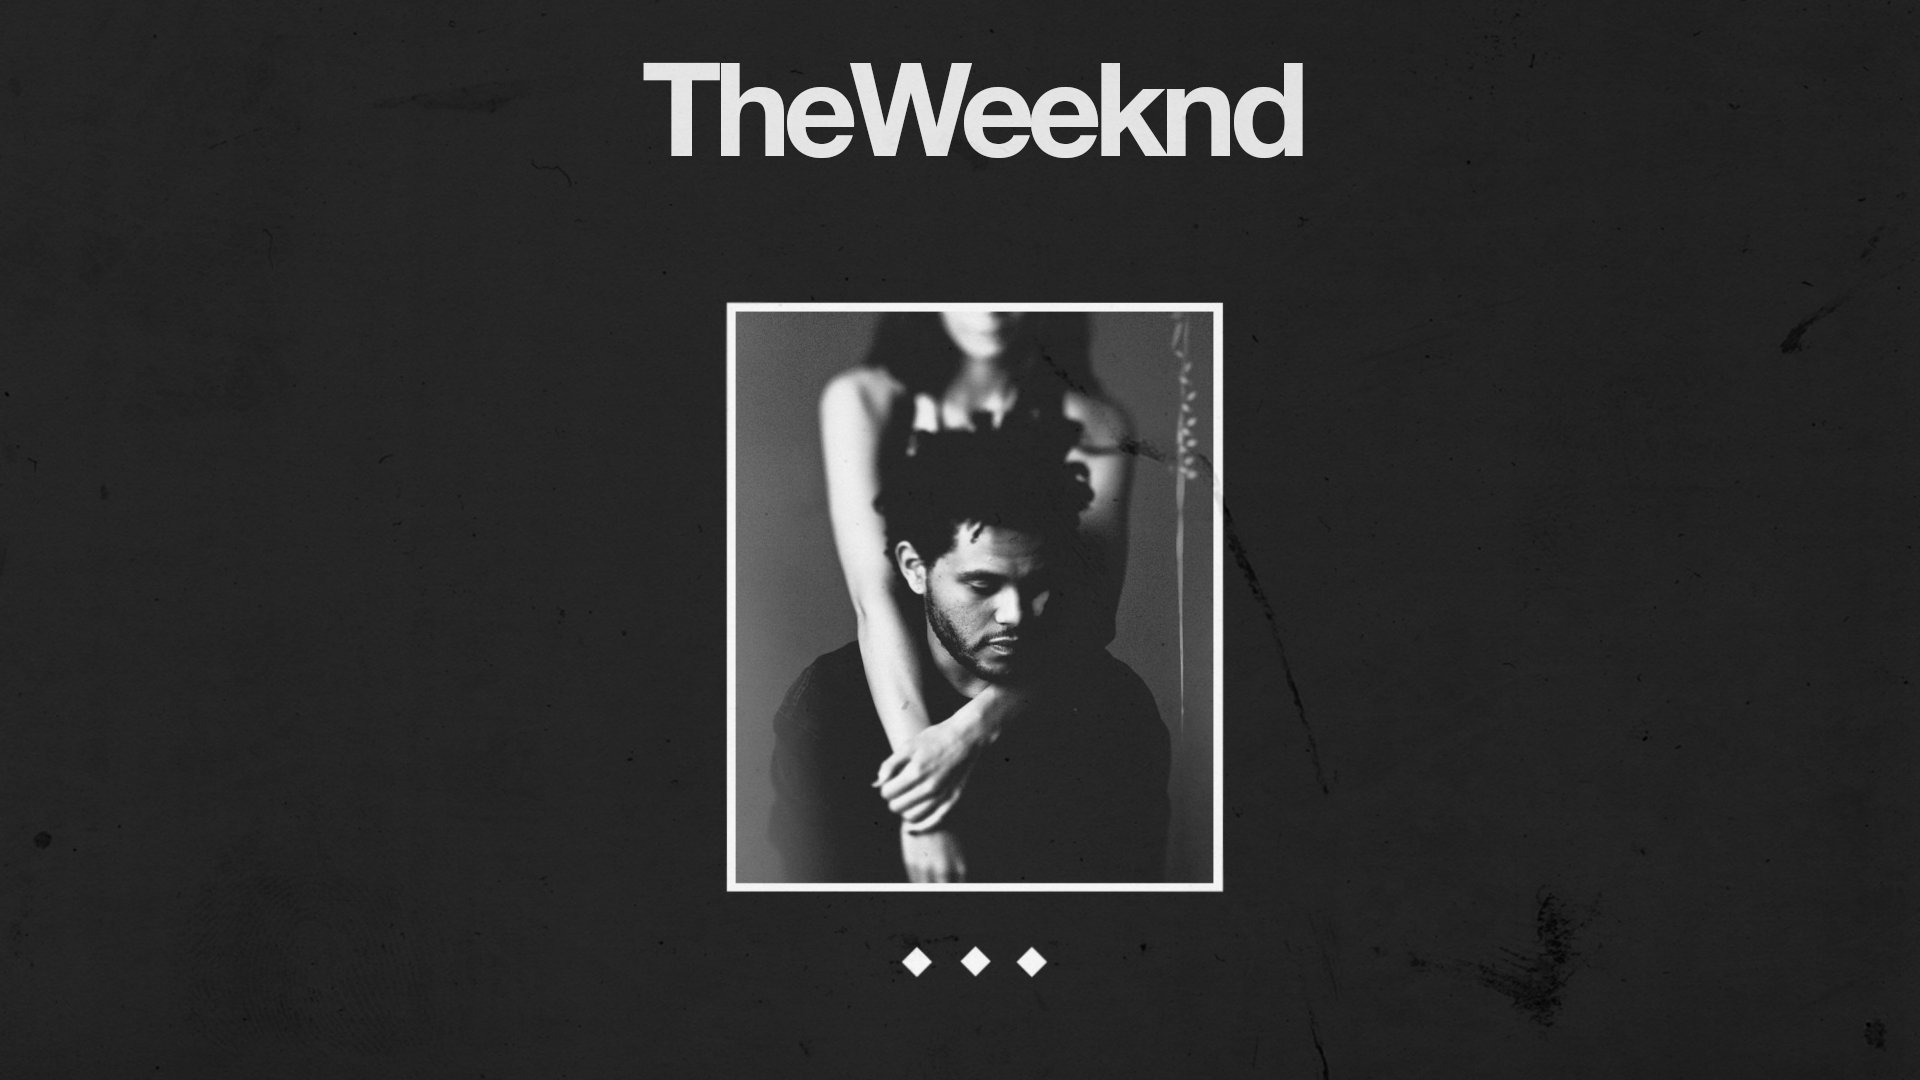 49+] The Weeknd Desktop Wallpaper - WallpaperSafari